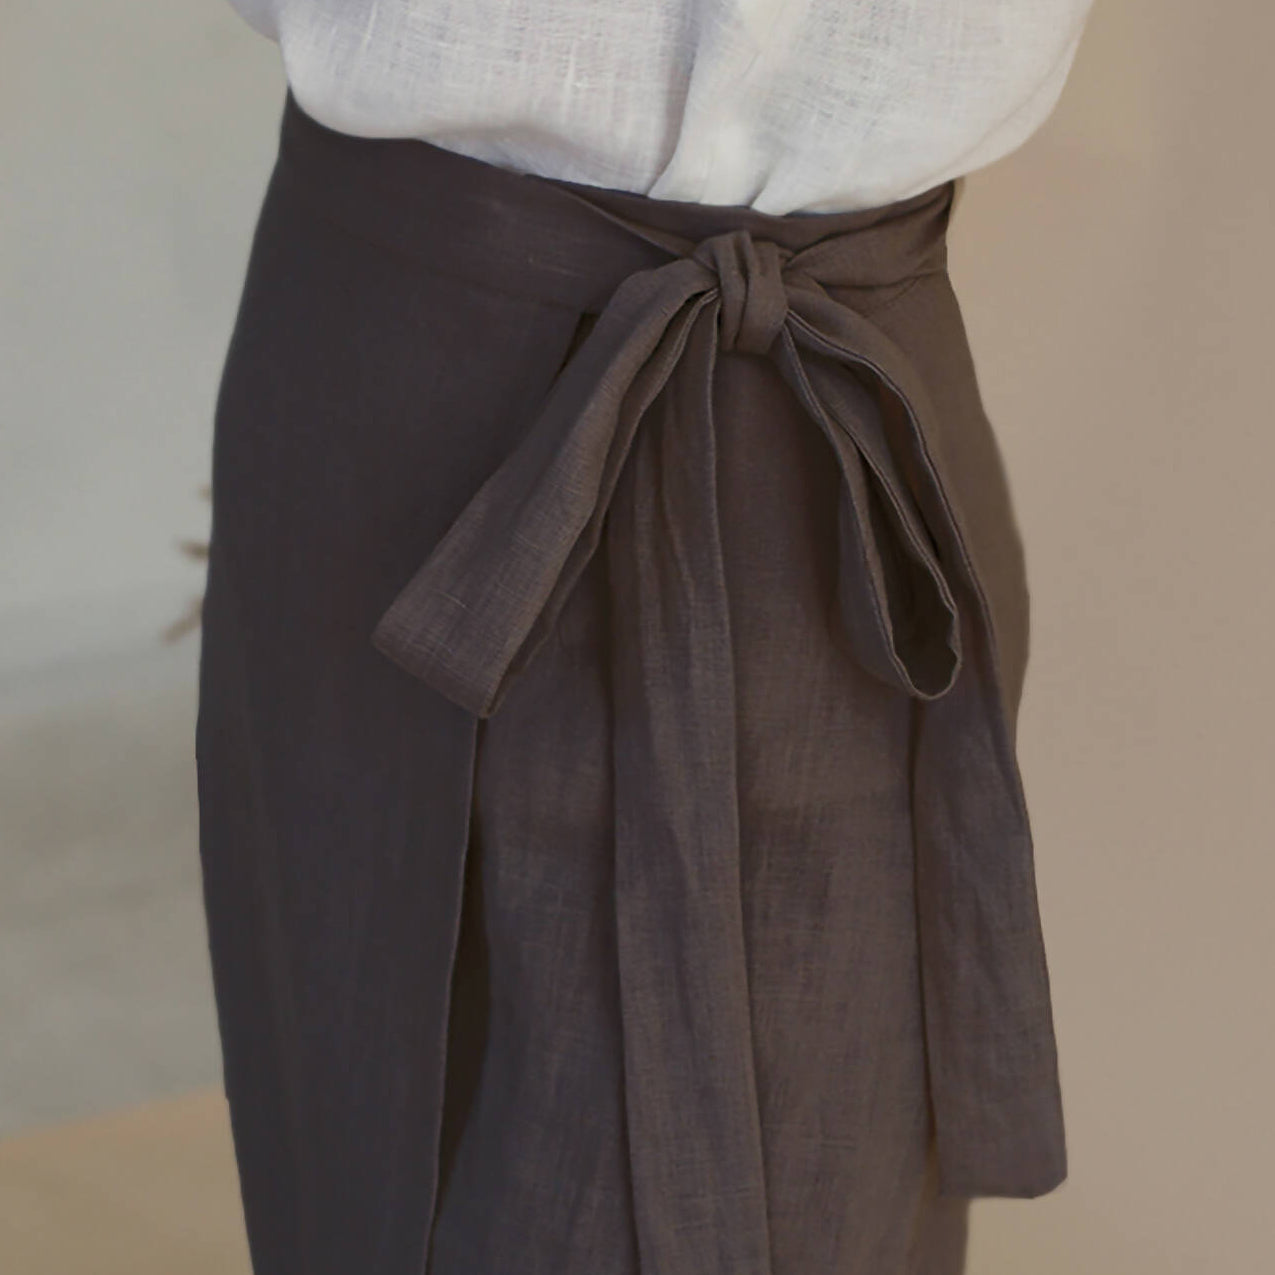 Cocoa Linen Wrap Skirt - 100% organic linen